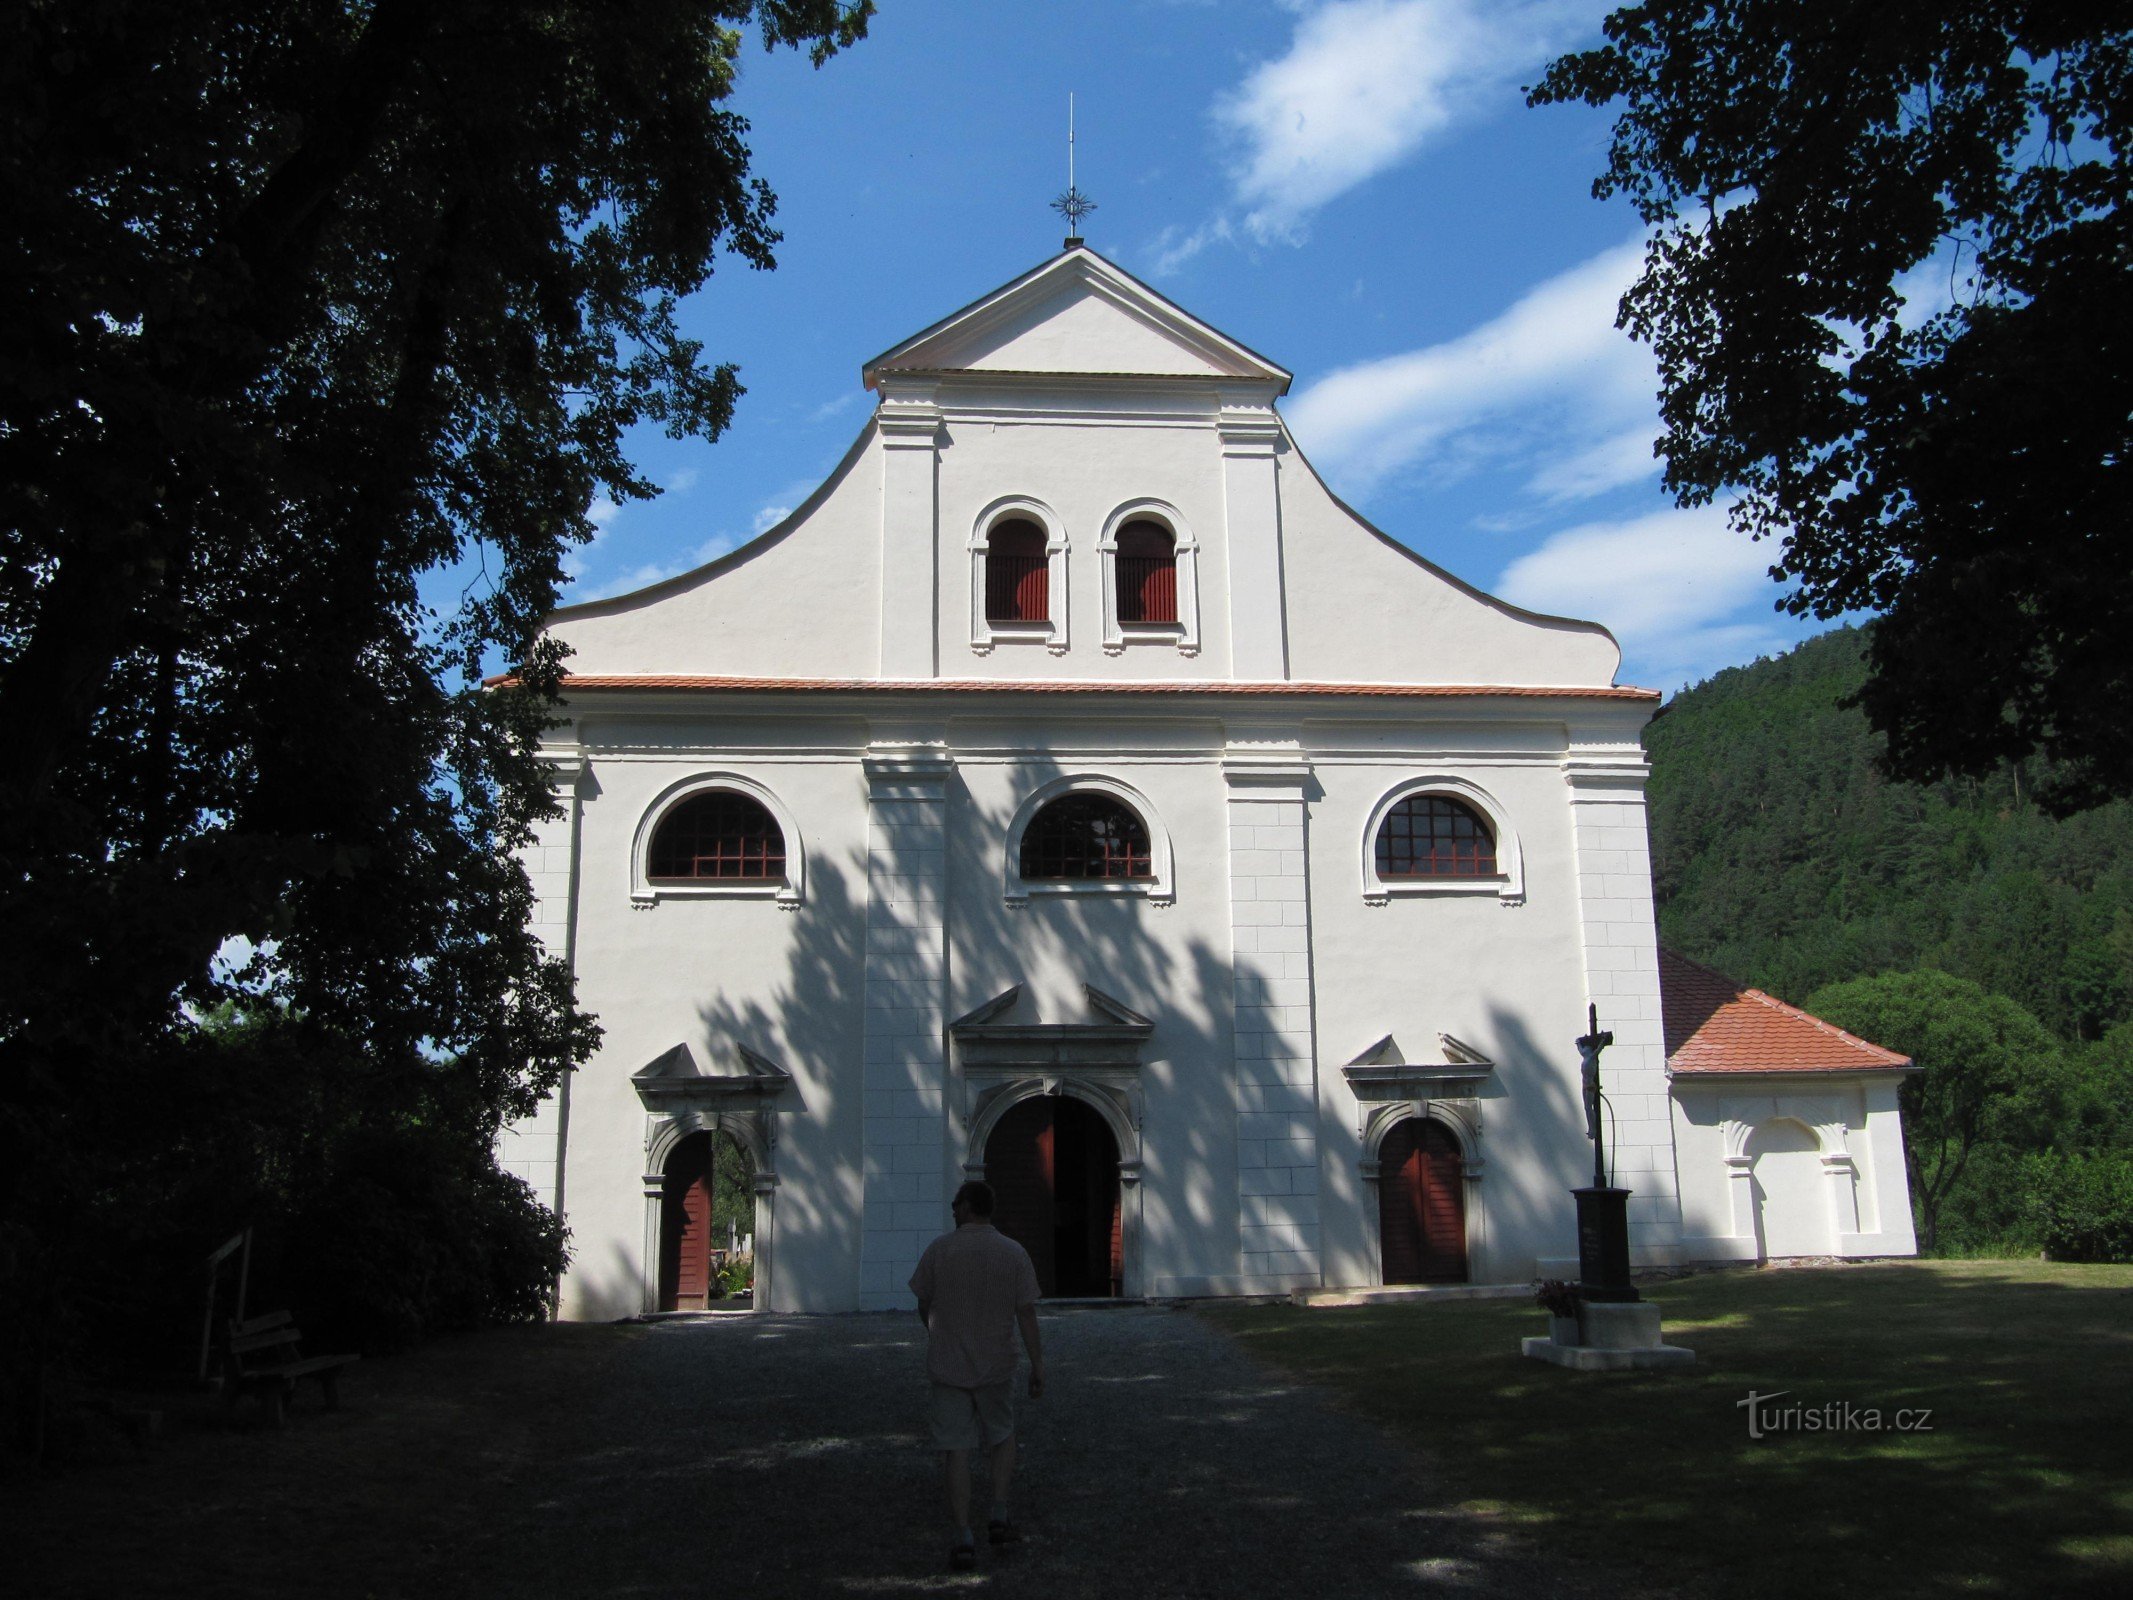 The Church of the Assumption of the Virgin Mary and the wooden bridge Černvír